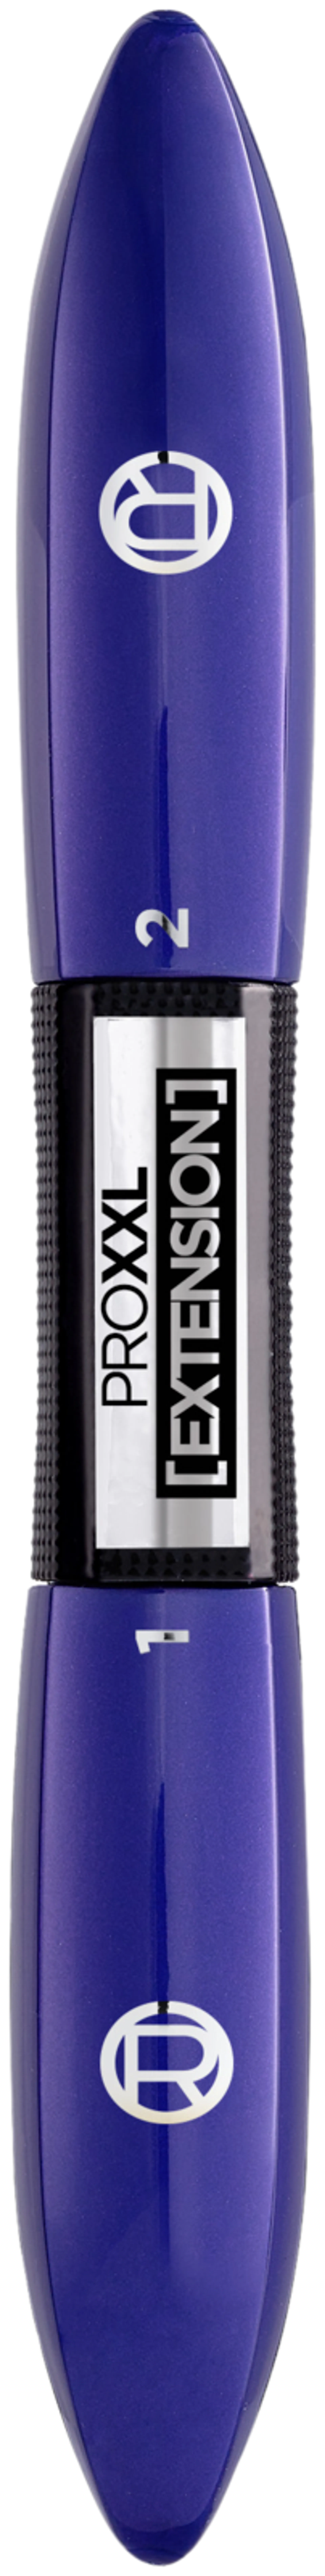 L'Oréal Paris Pro XXL Extension musta maskara 12ml - 1